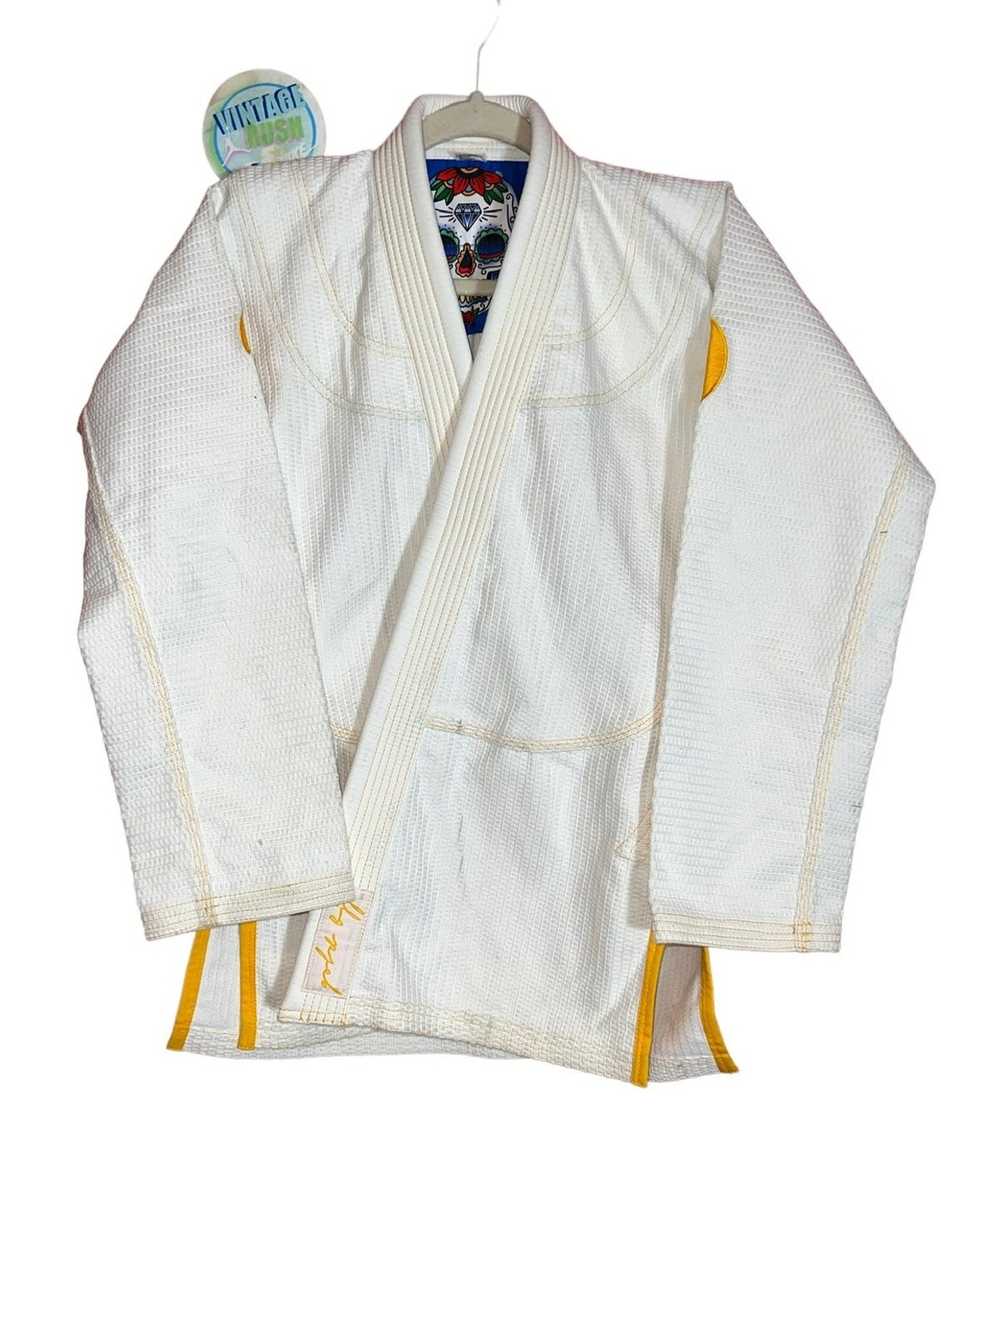 Japanese Brand Ju jitsu white gi new karate - image 1